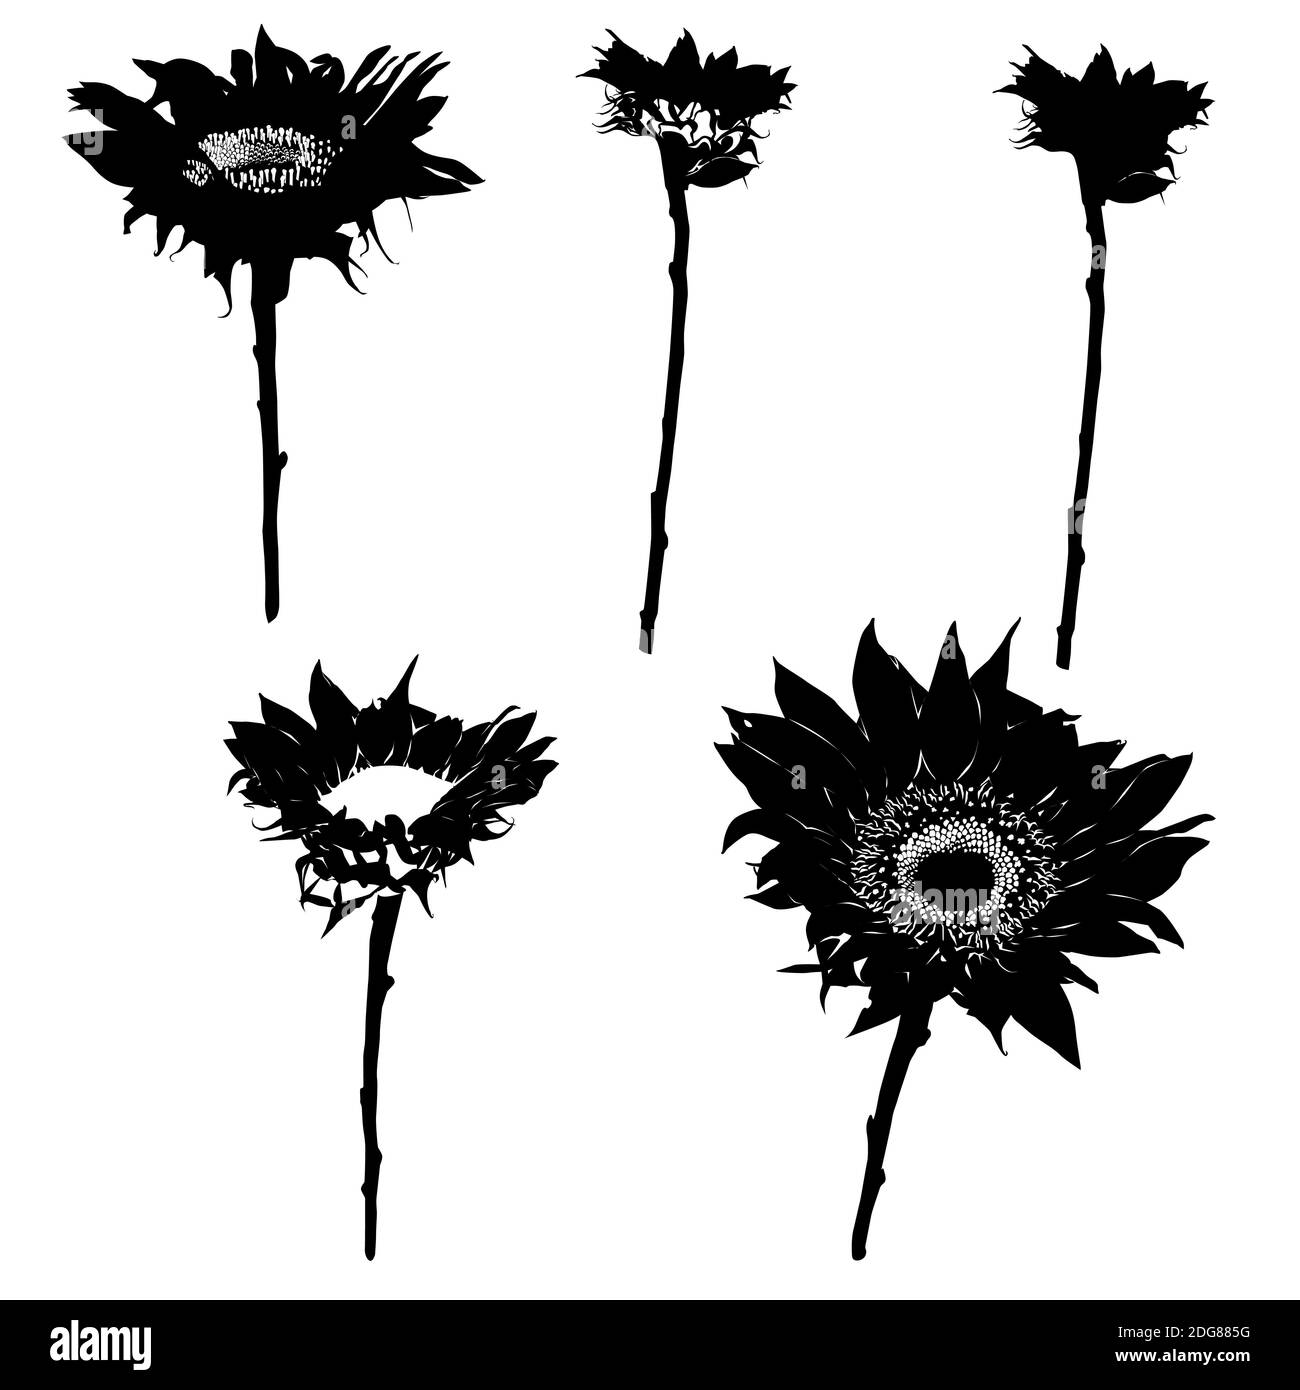 Sunflower silhouettes series Stock Photo